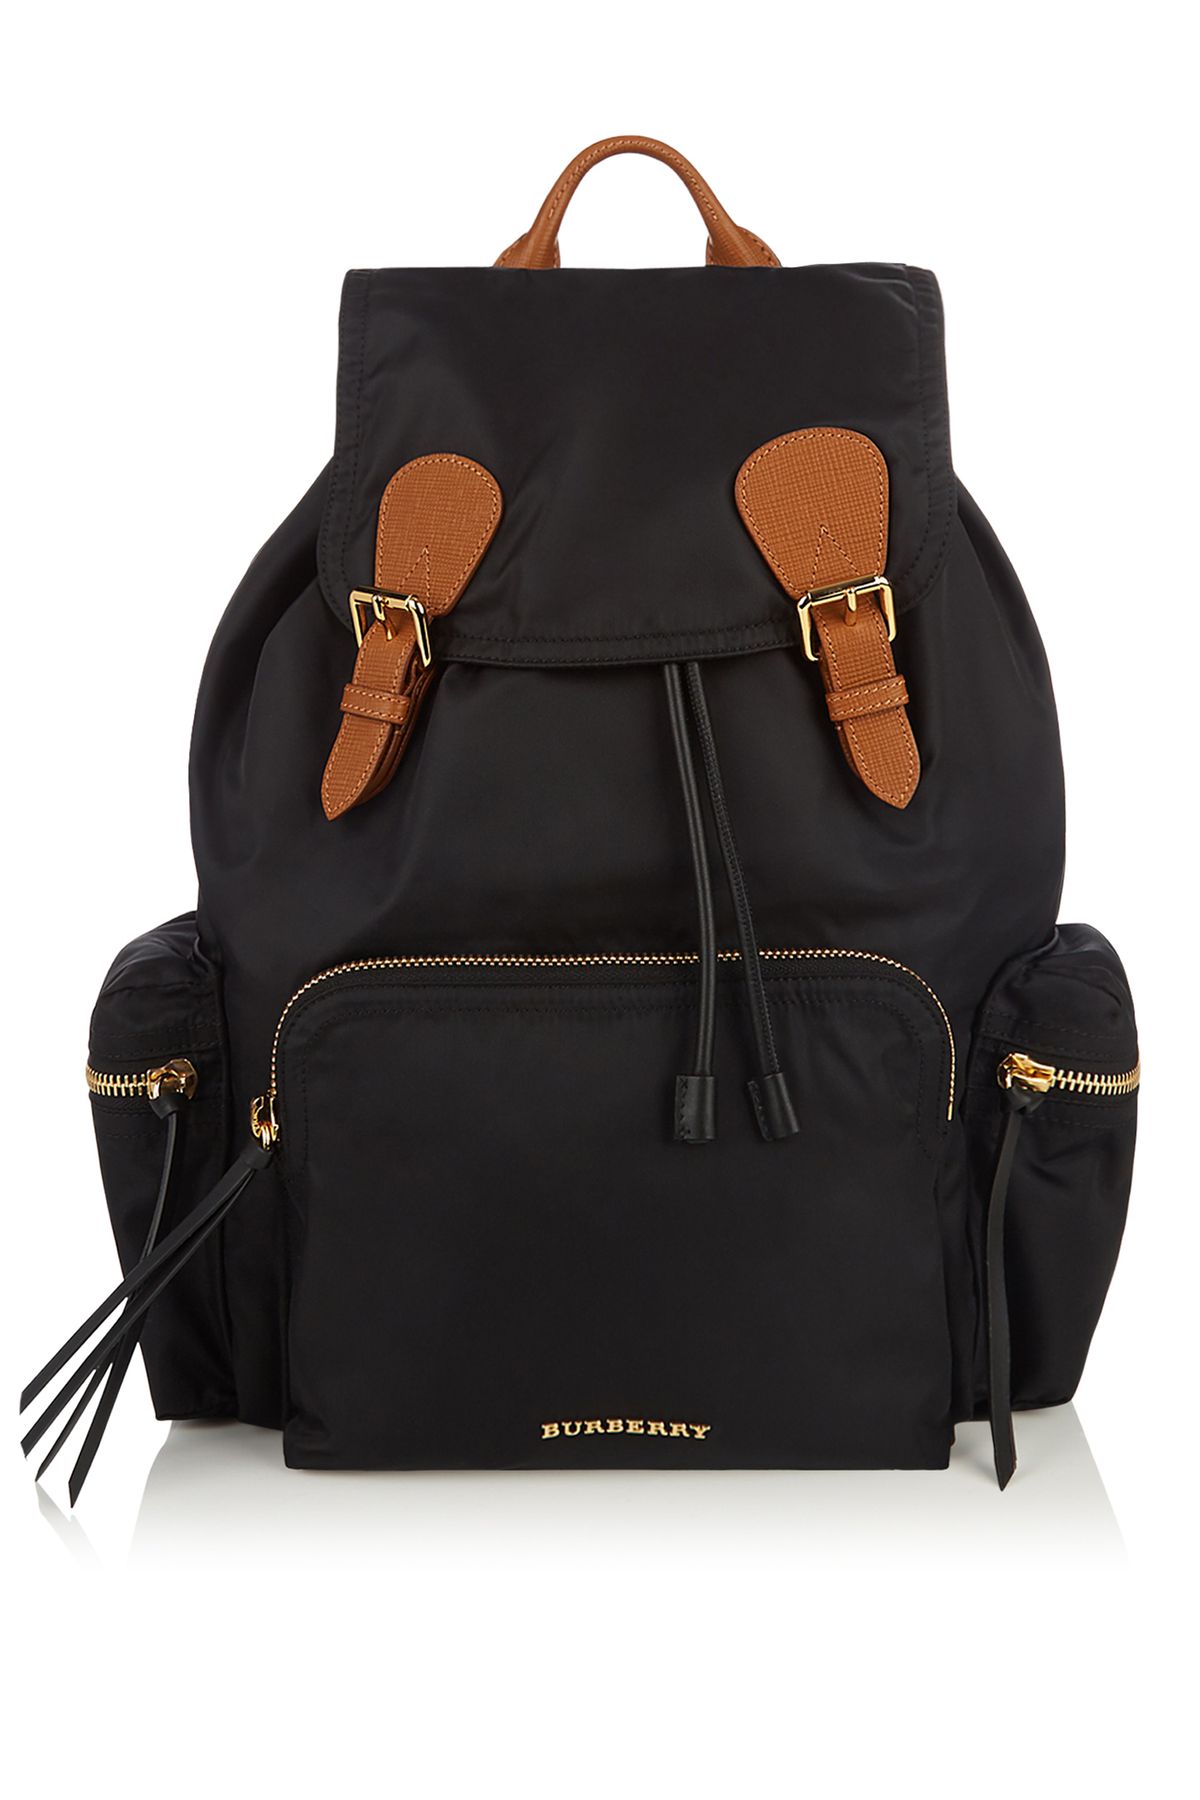 Burberry Large Nylon Backpack, $1,149